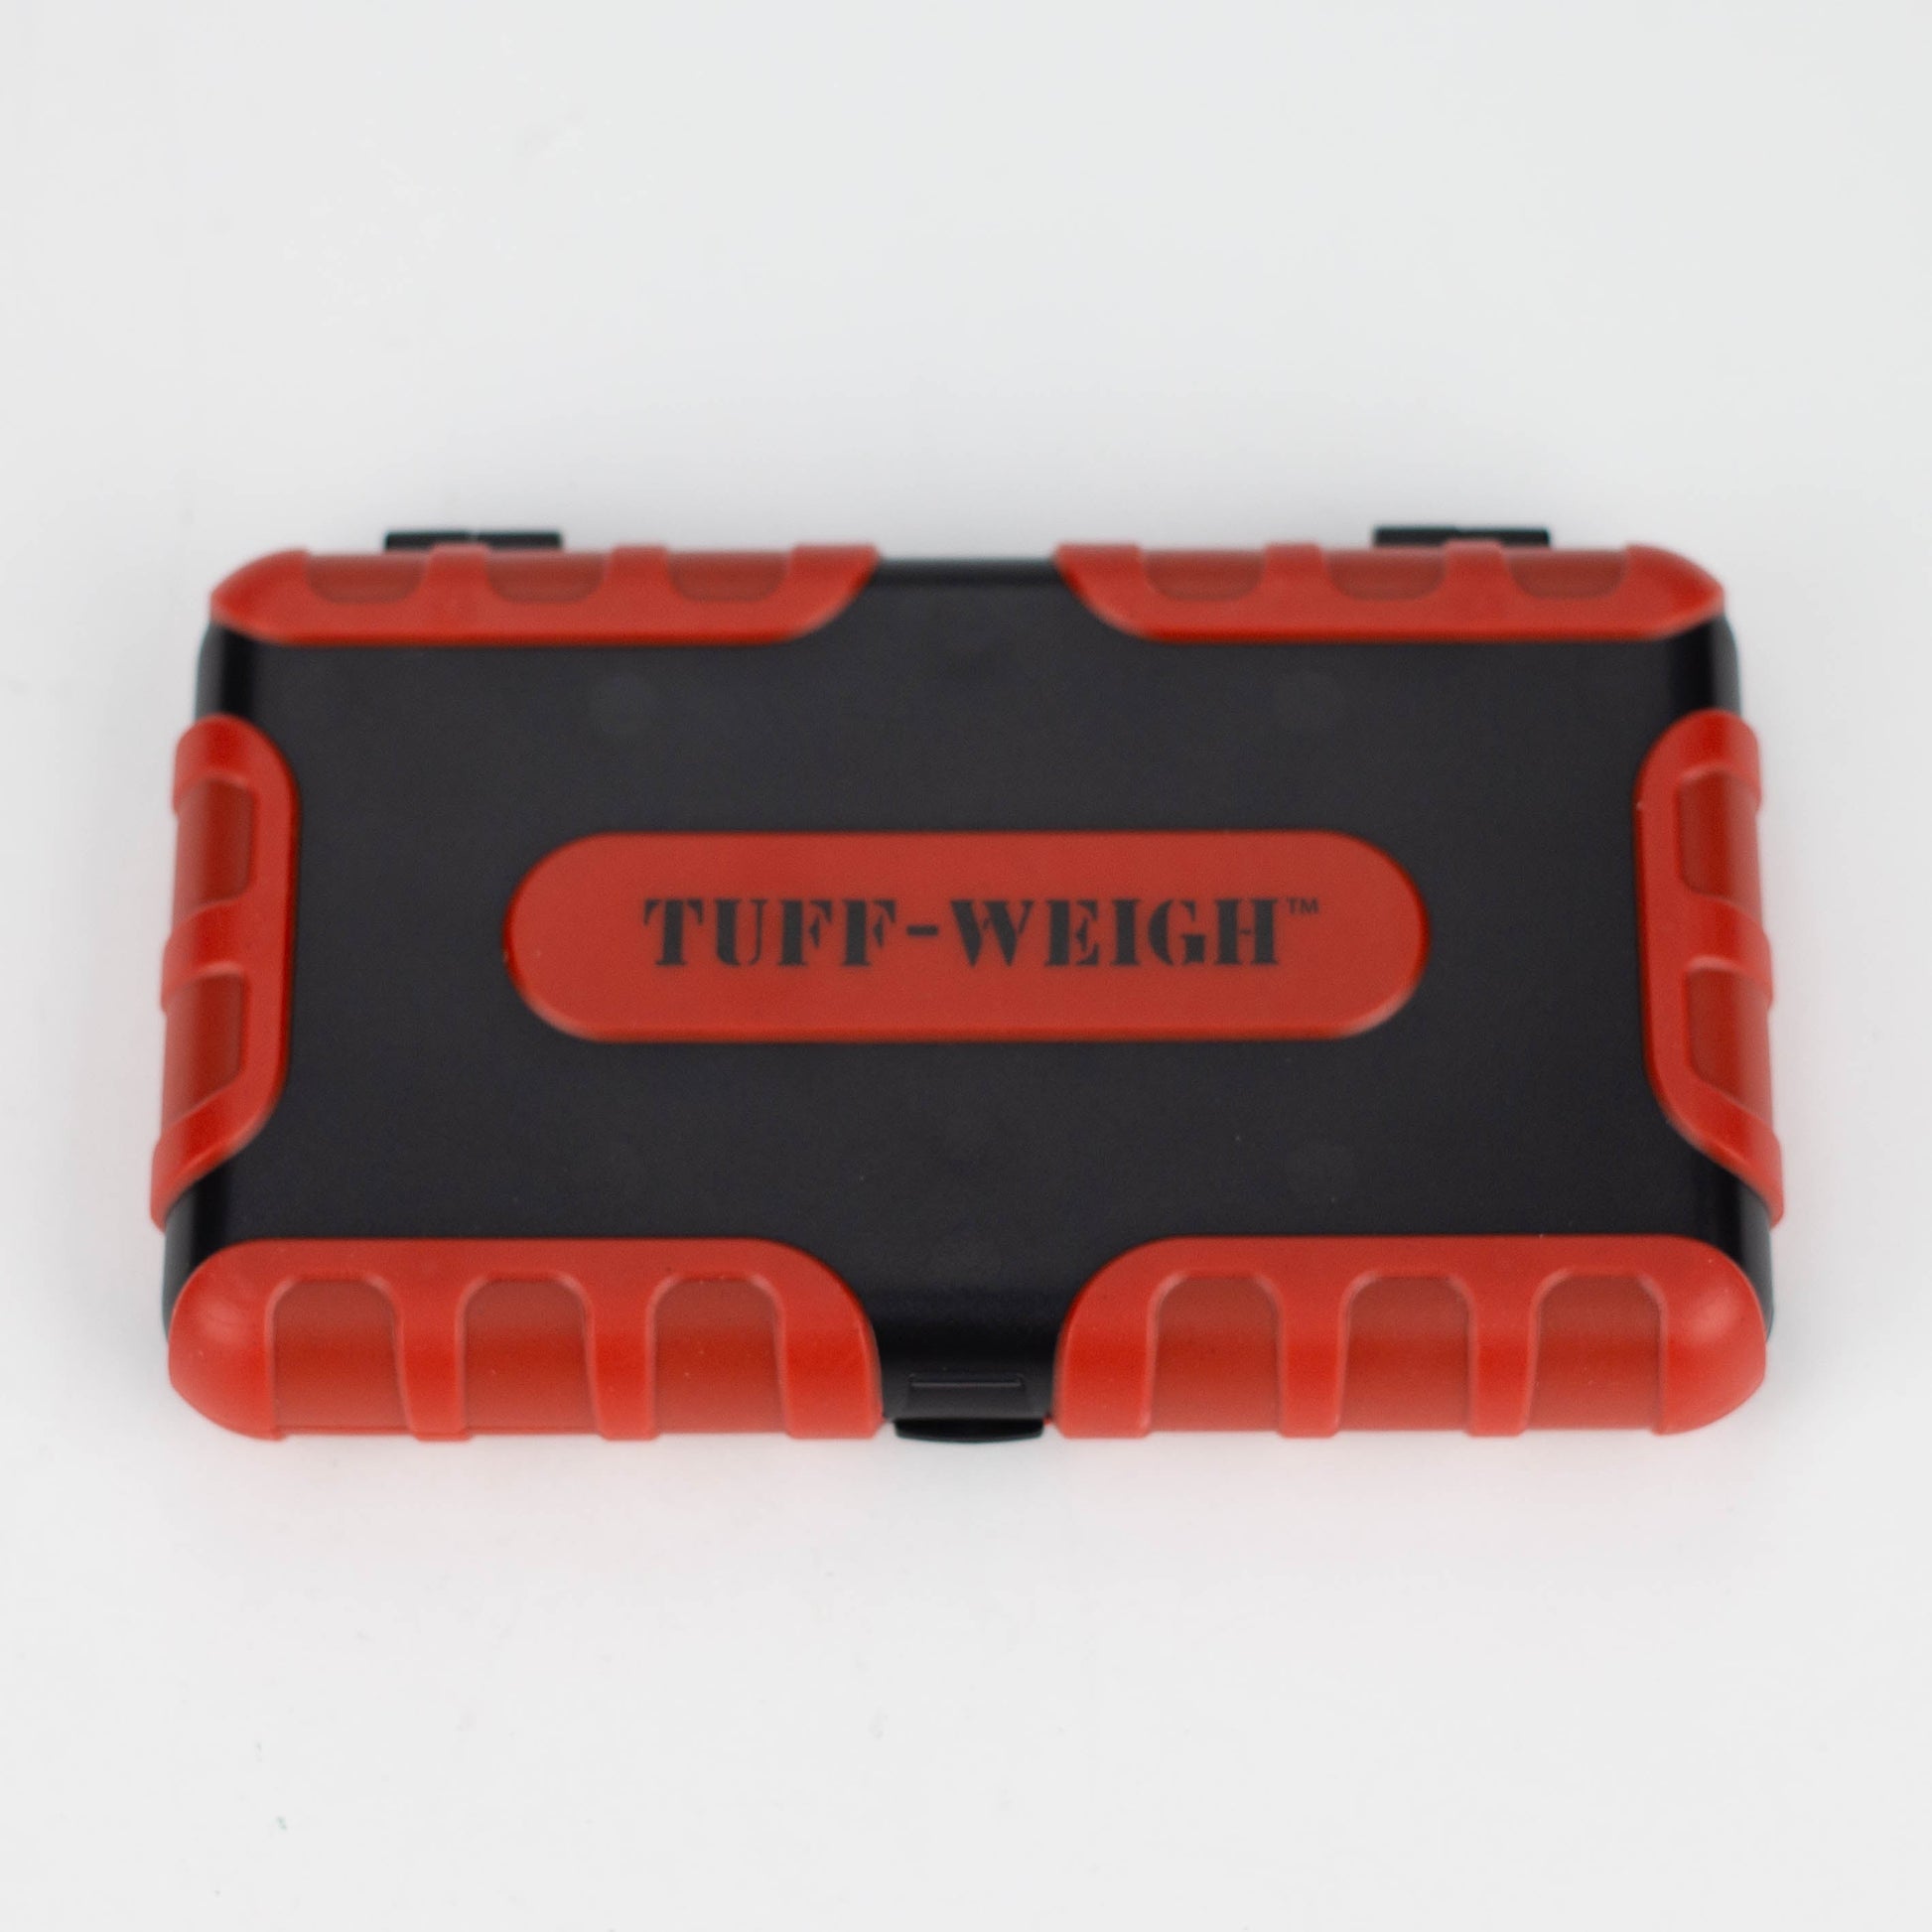 Truweigh | Tuff-Weigh Scale - 1000g x 0.1g_5